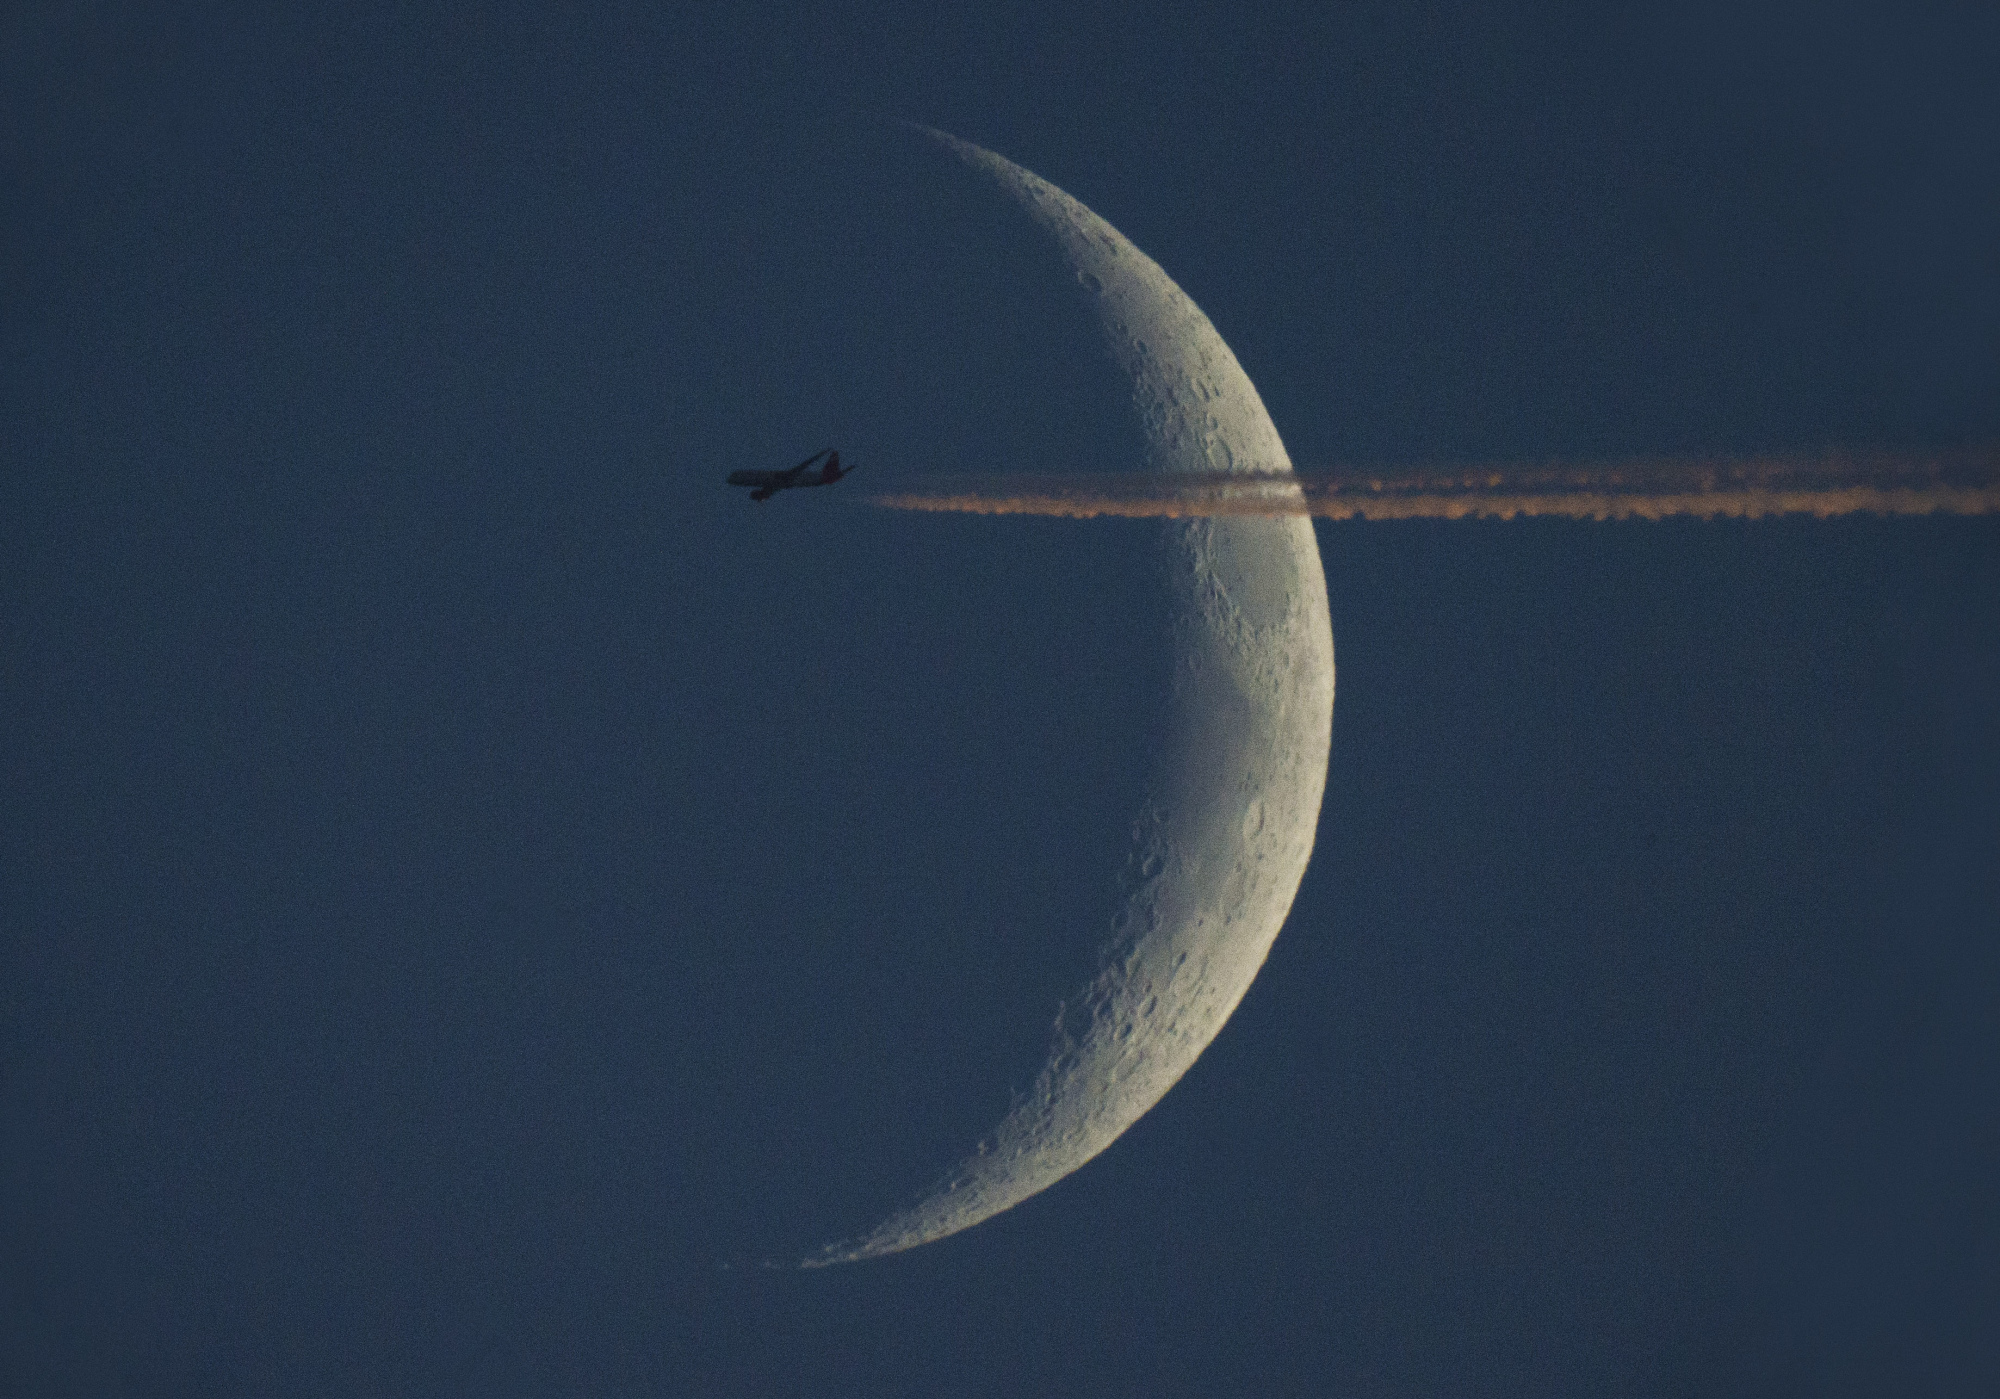 Lune Avion 22 nov 2017 Vign.jpg